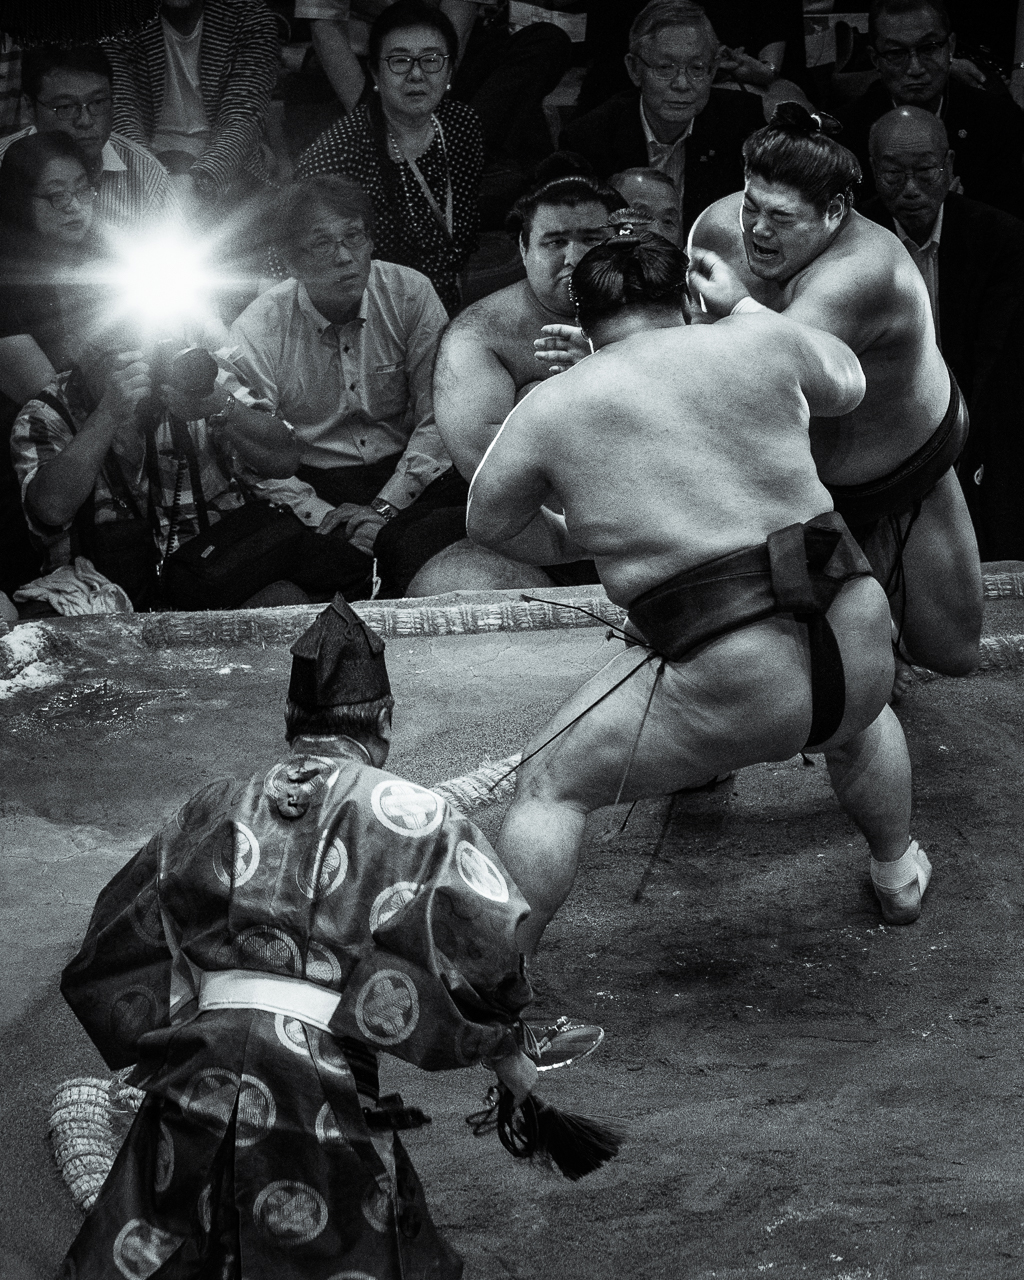 Sumo wrestlers at the 2018 Sumo Championship, Ryogoku Kokugikan national stadium, Tokyo, Japan.